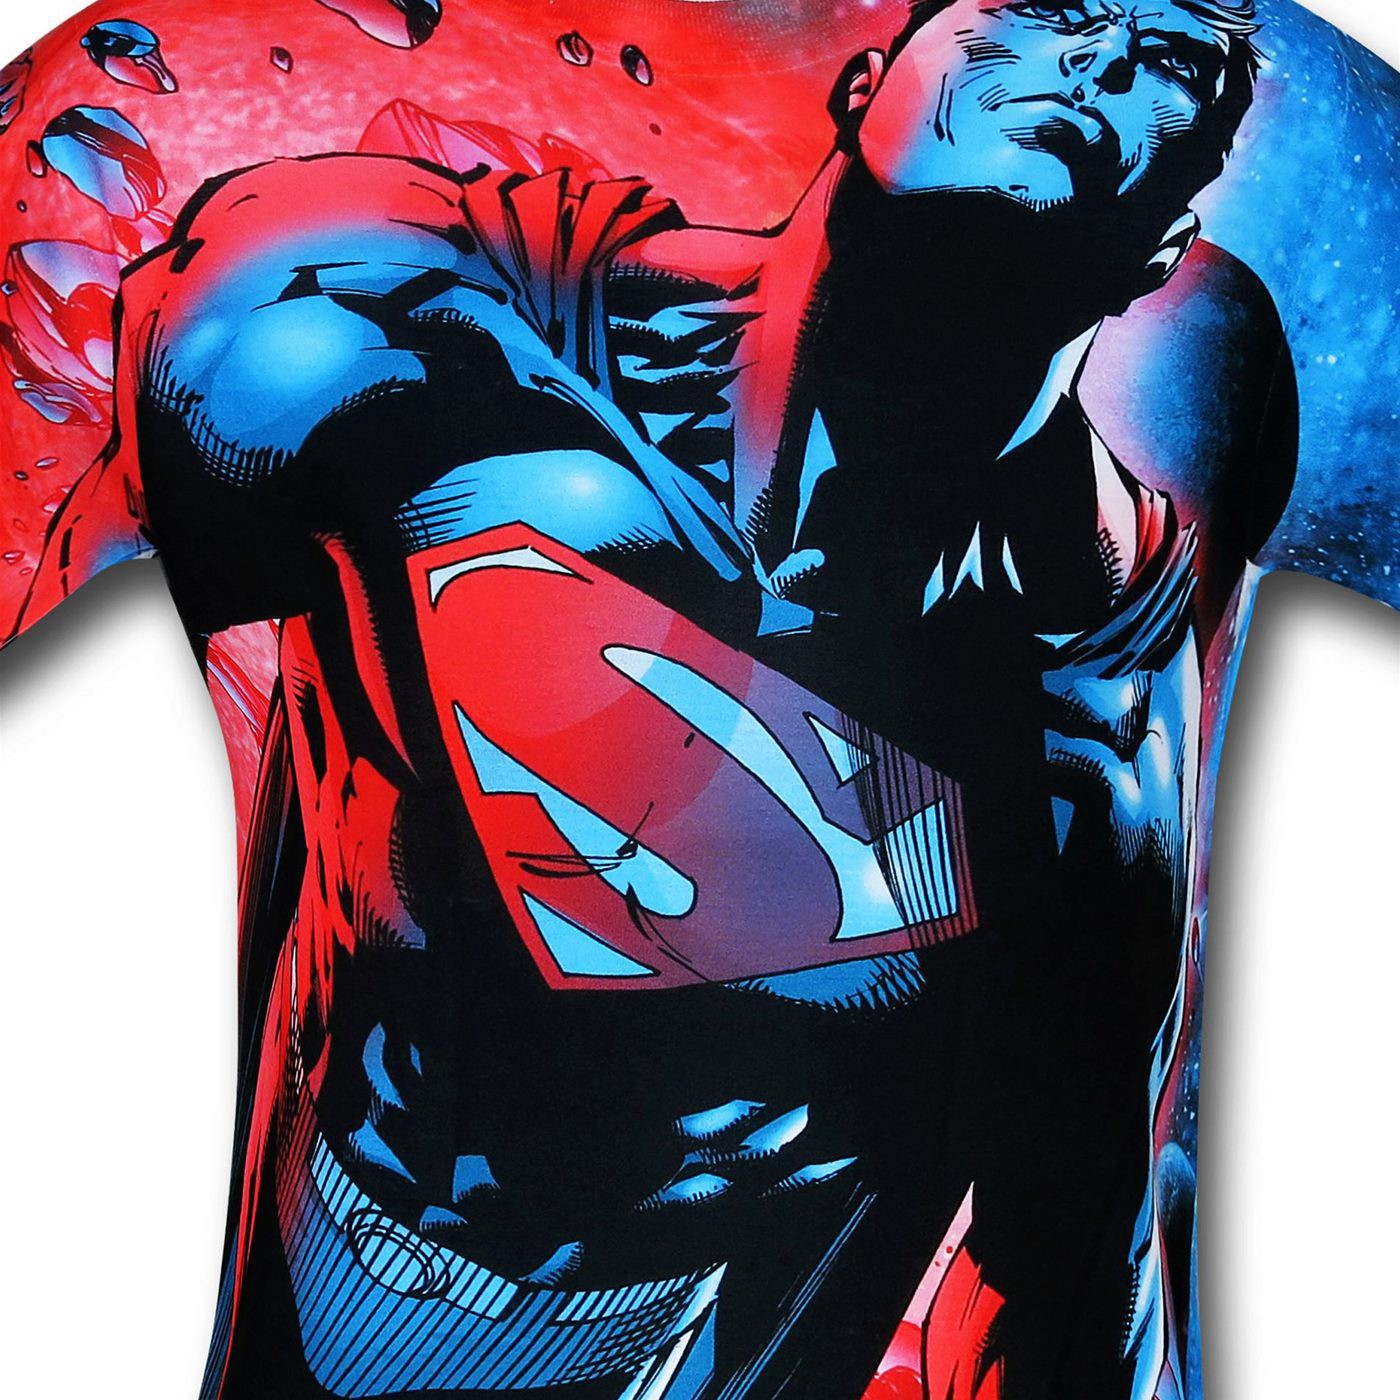 Superman Space Flight Sublimated T-Shirt